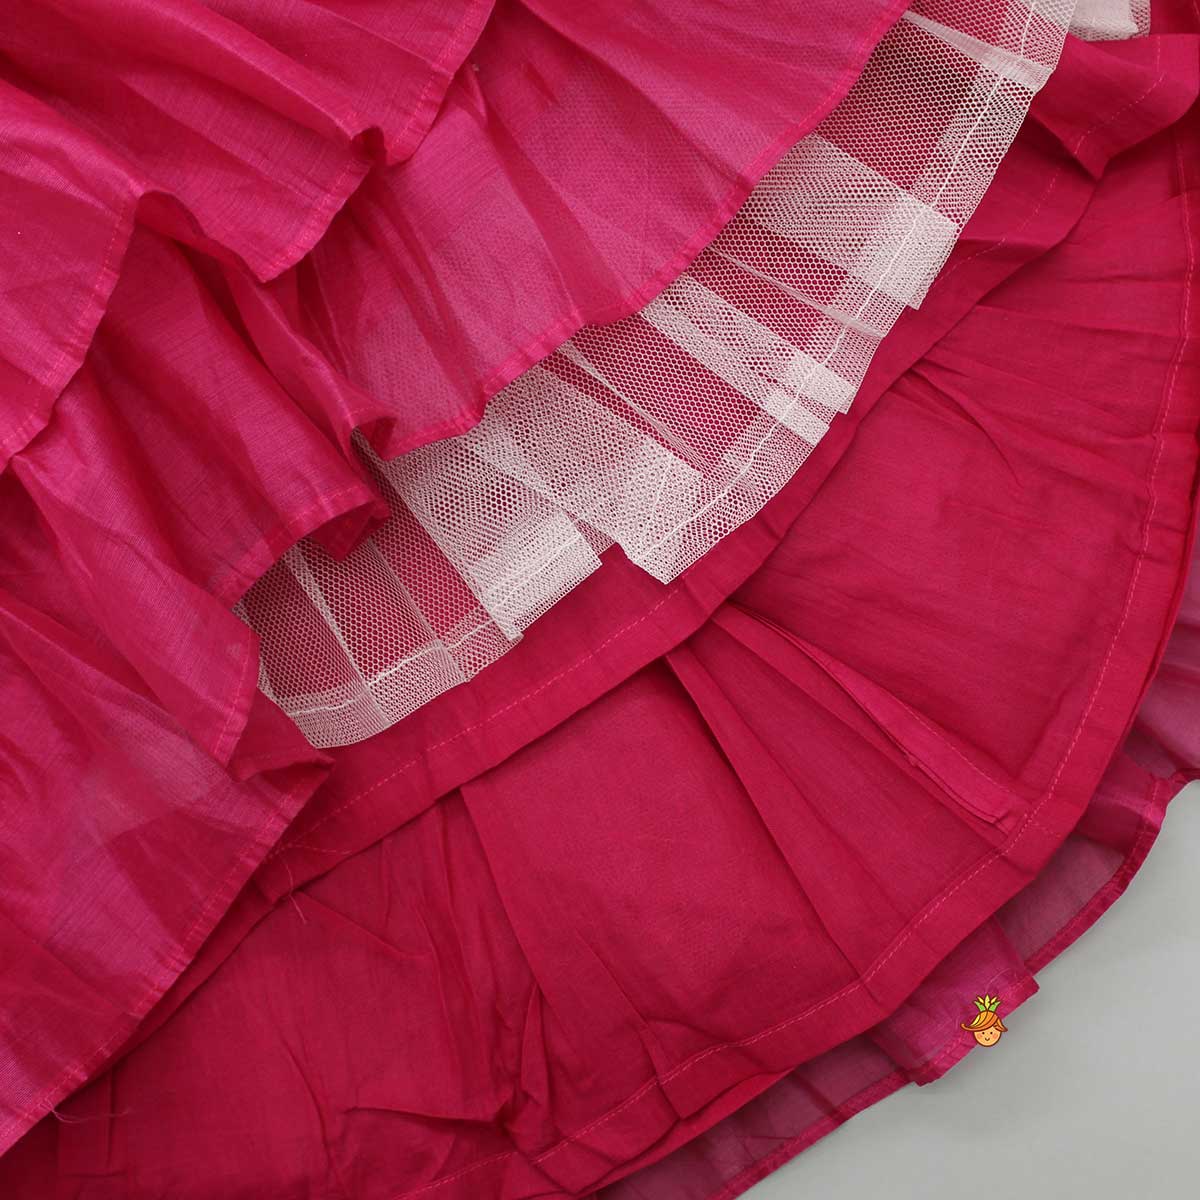 Charming Floral Cut Dana Embroidered Rani Pink Top And Multi Layered Ruffle Lehenga